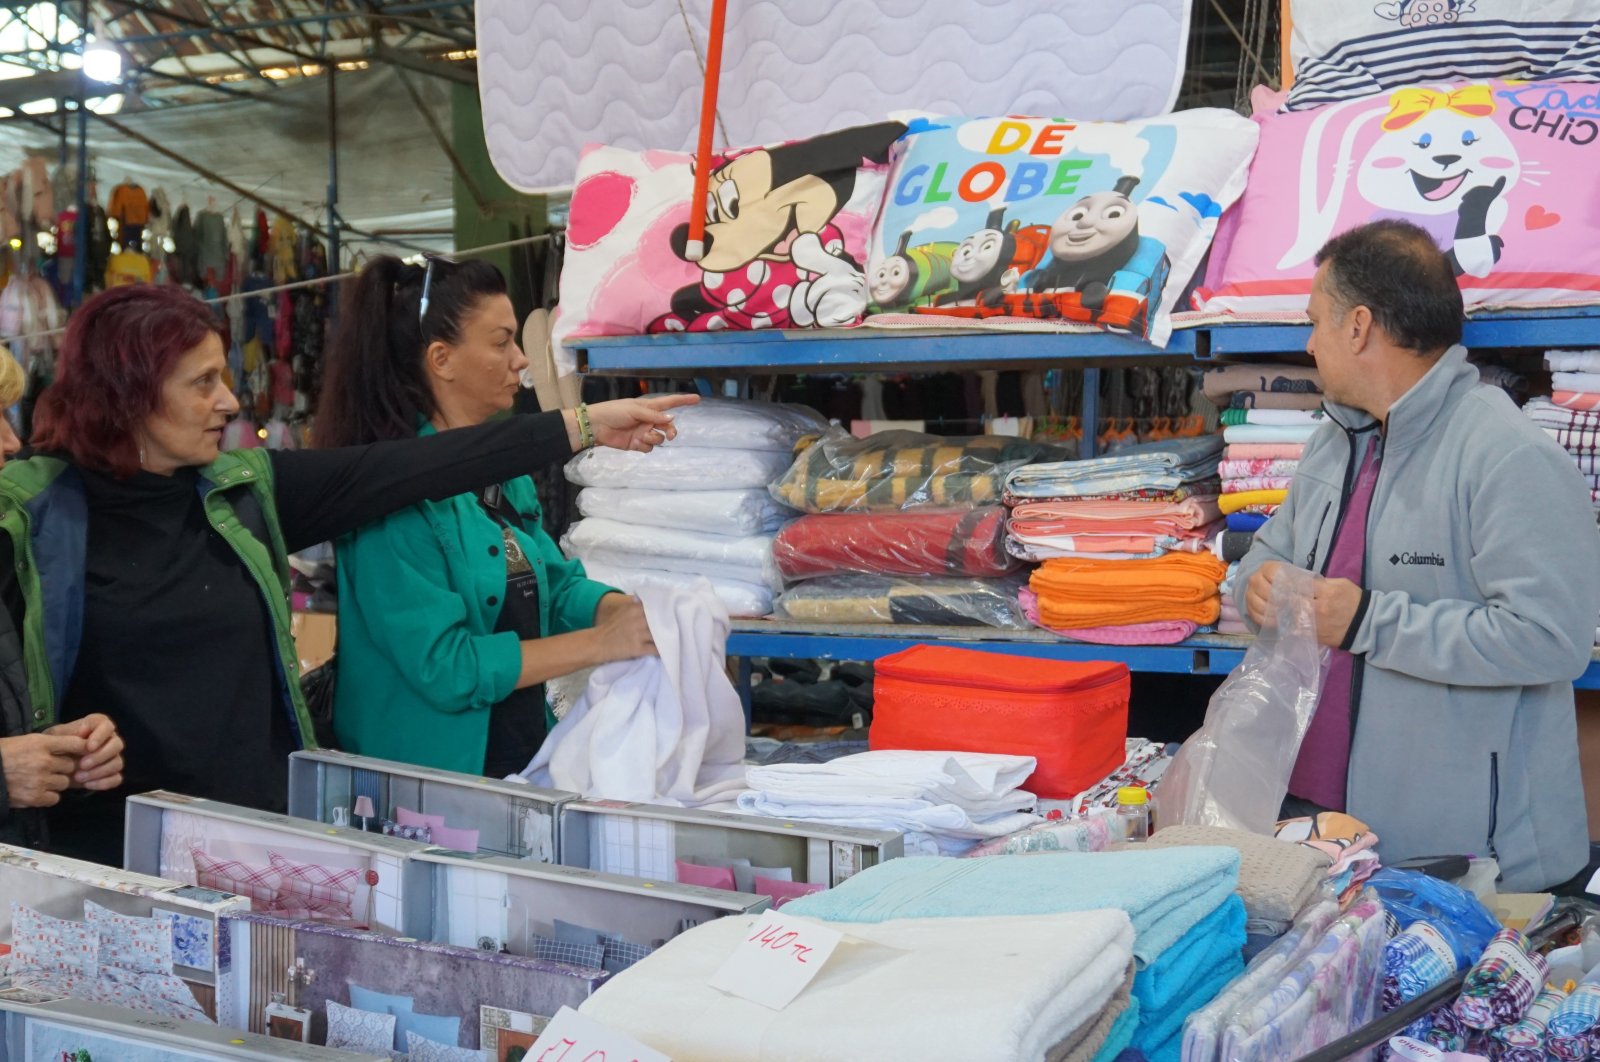 Visitors from Bulgaria shop at a market in Edirne, northwestern Türkiye, Oct. 6, 2022. (IHA Photo)